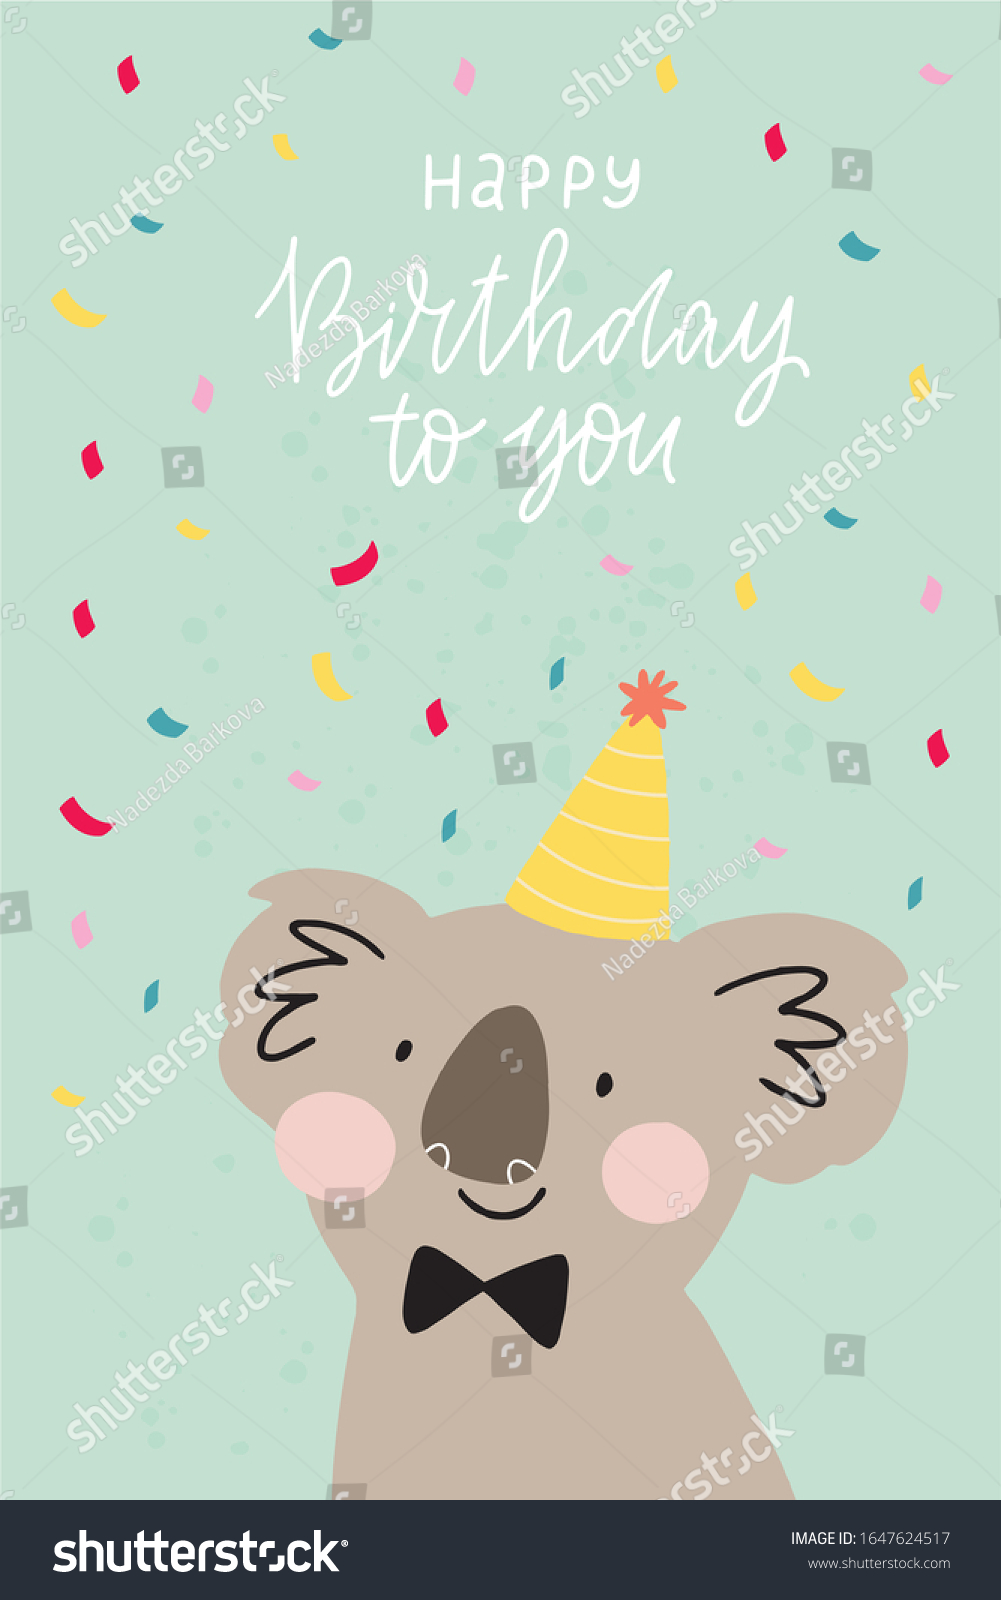 3,115 Cute koala birthday card Images, Stock Photos & Vectors ...